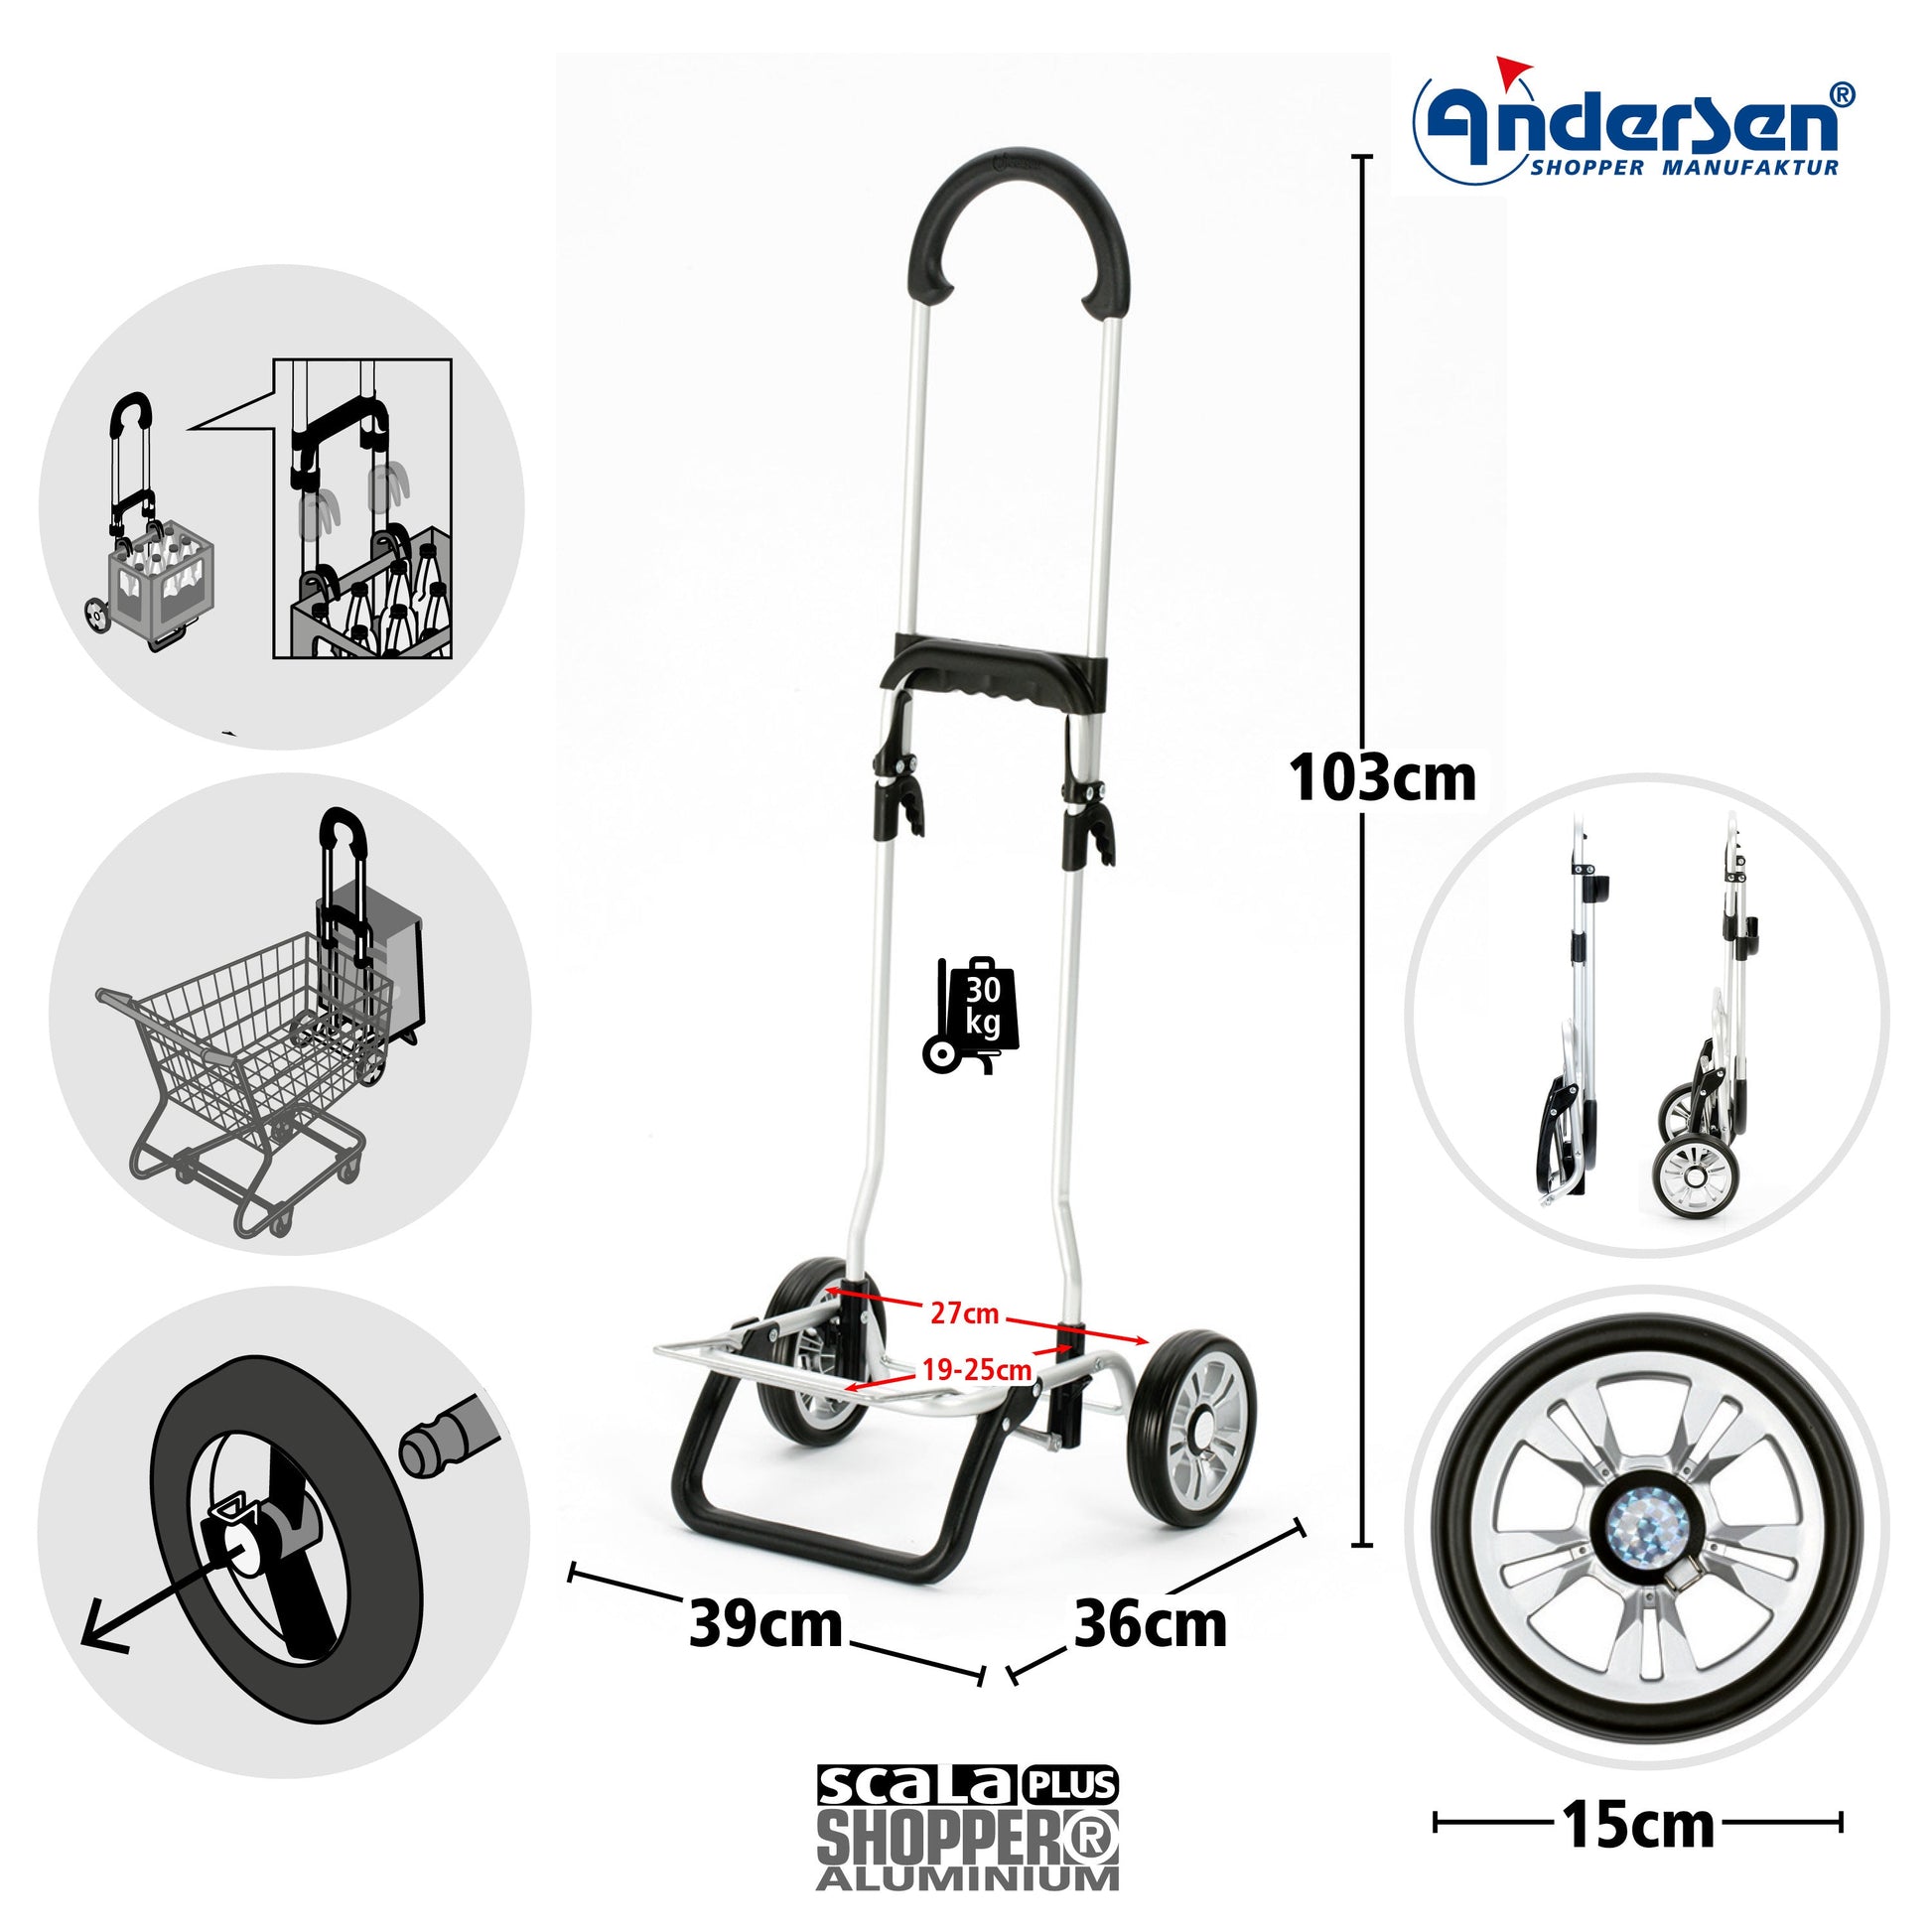 Andersen Shopper Manufaktur-Scala Shopper Plus Urs braun-www.shopping-trolley.ch-bild2